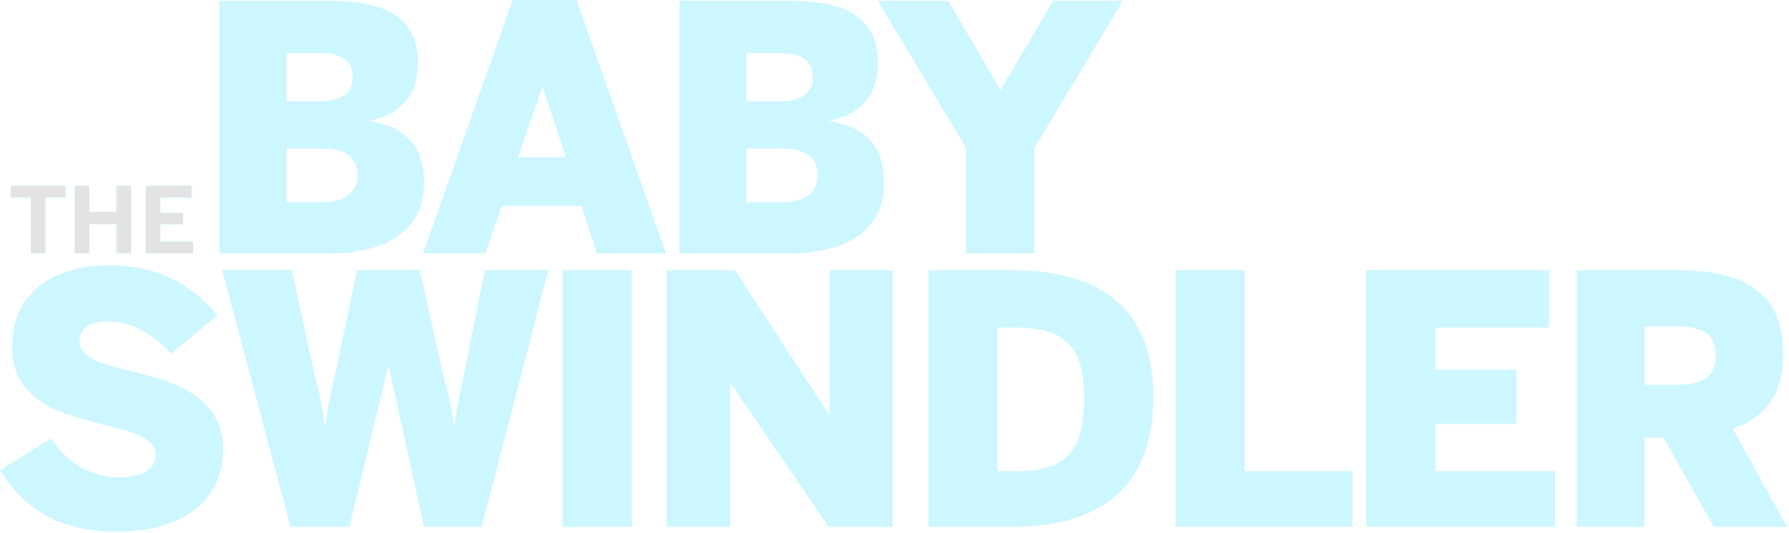 The Baby Swindler logo